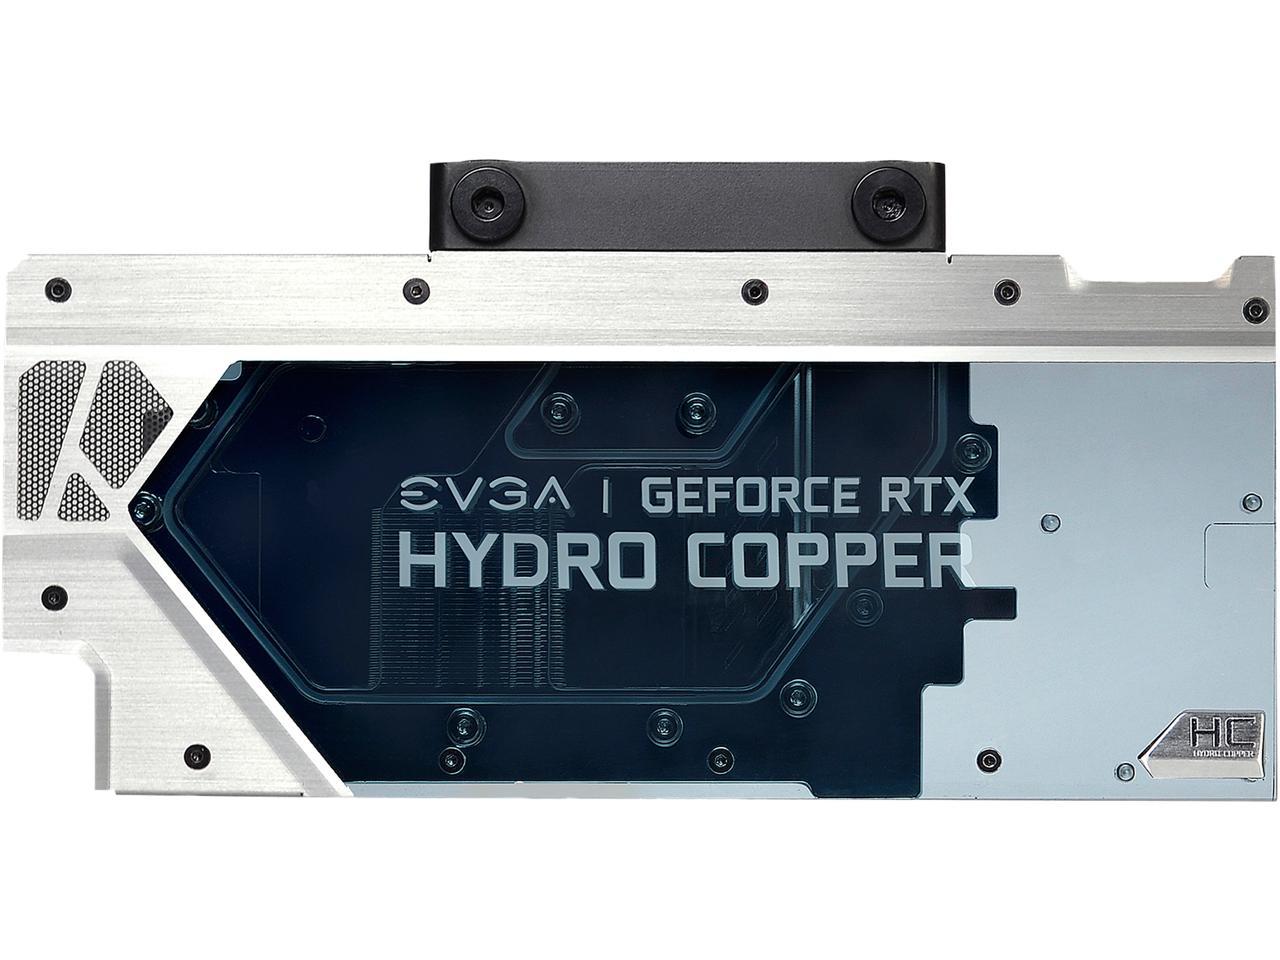 EVGA Hydro Copper Waterblock for EVGA GeForce RTX 2080 FTW3, RGB